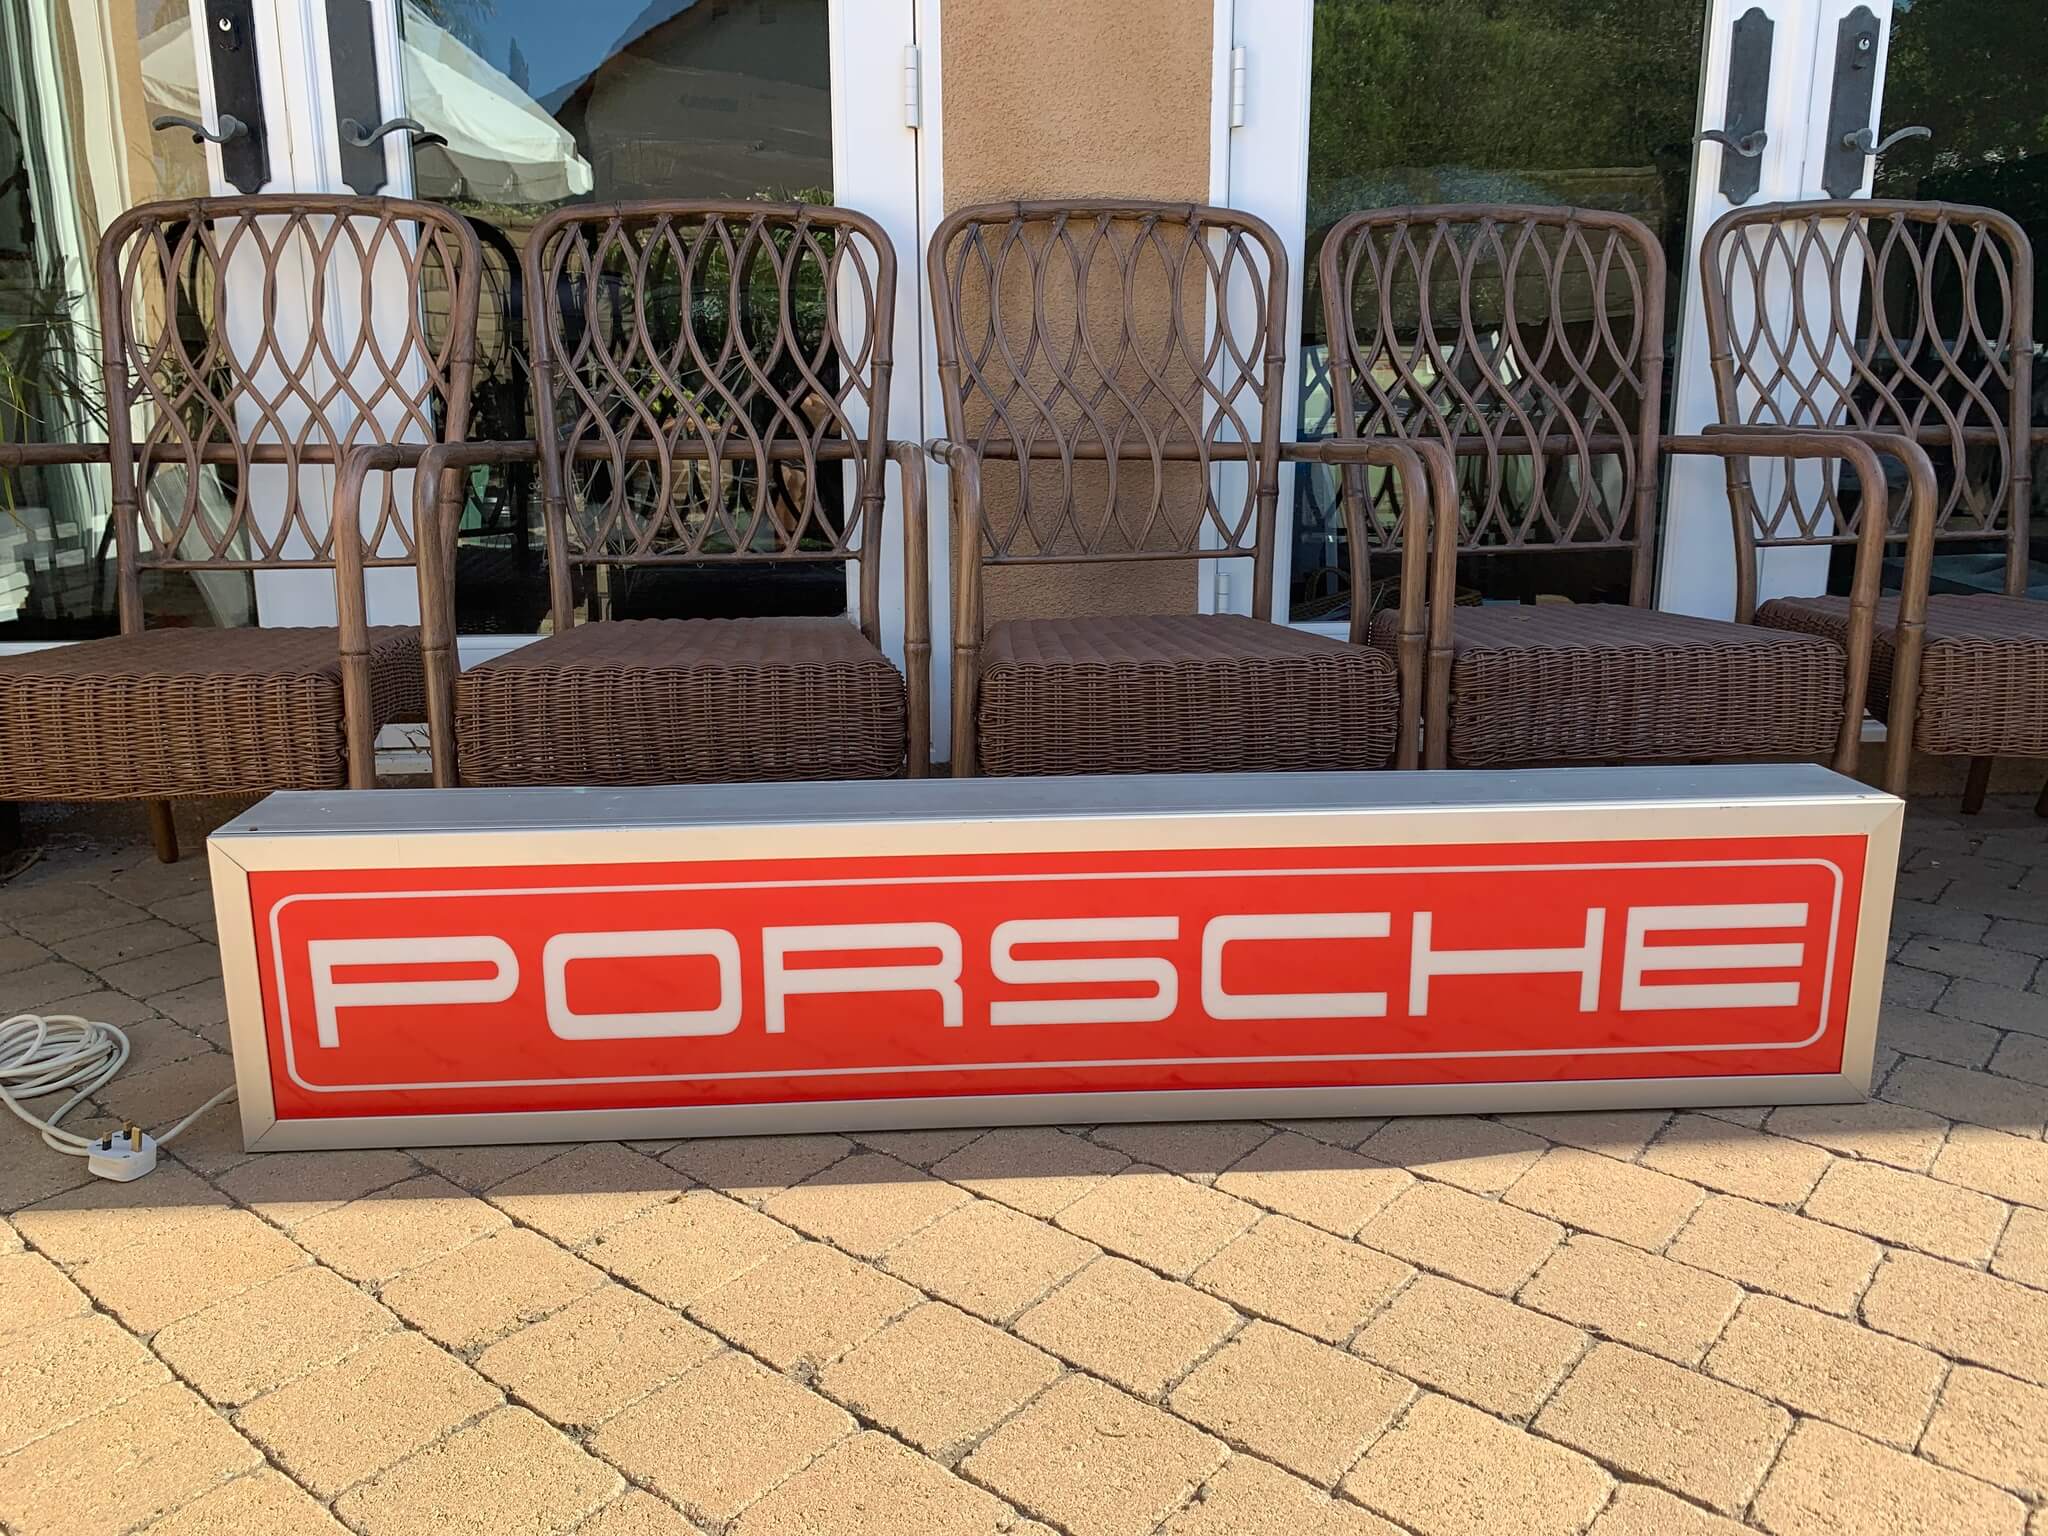  Single-sided Illuminated Porsche Dealership Sign (61" x 12")